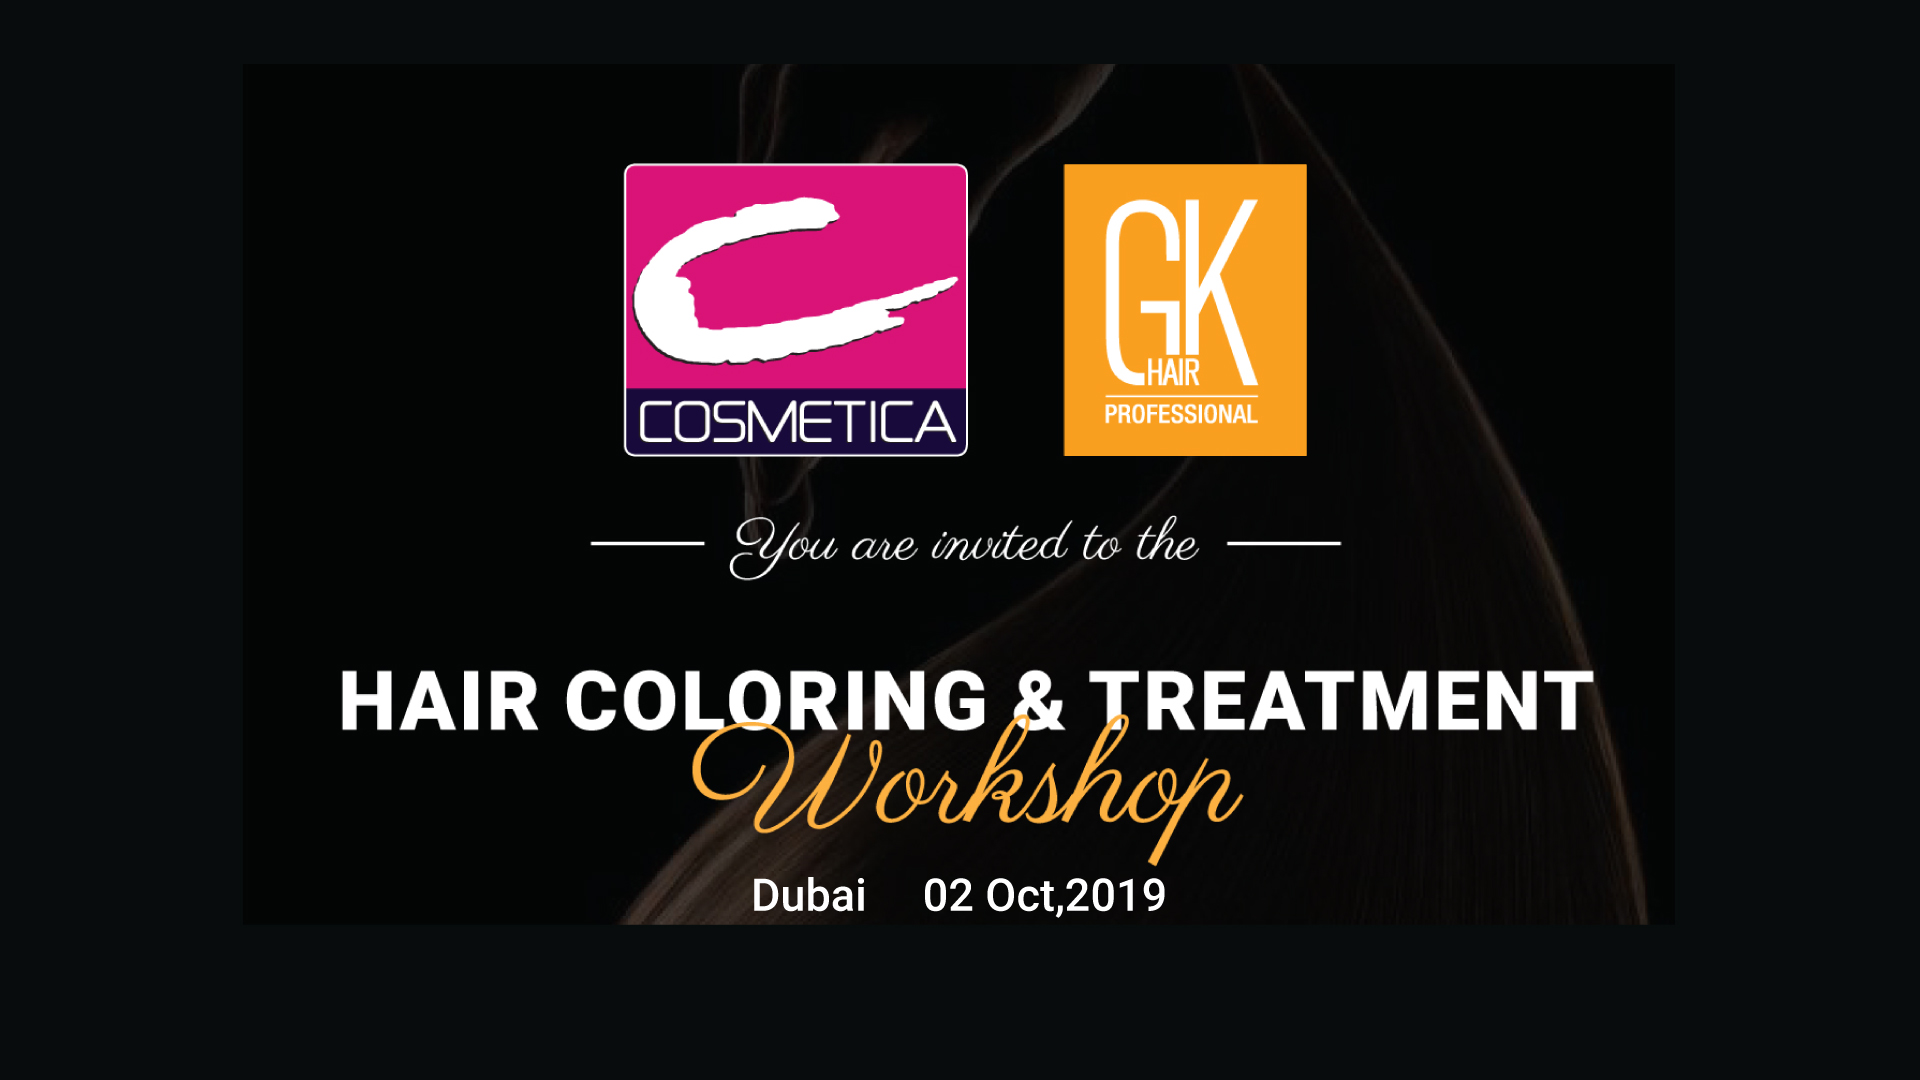 COSMETICA AND GKhair Hair Coloring & Treatment Workshop Dubai 2019